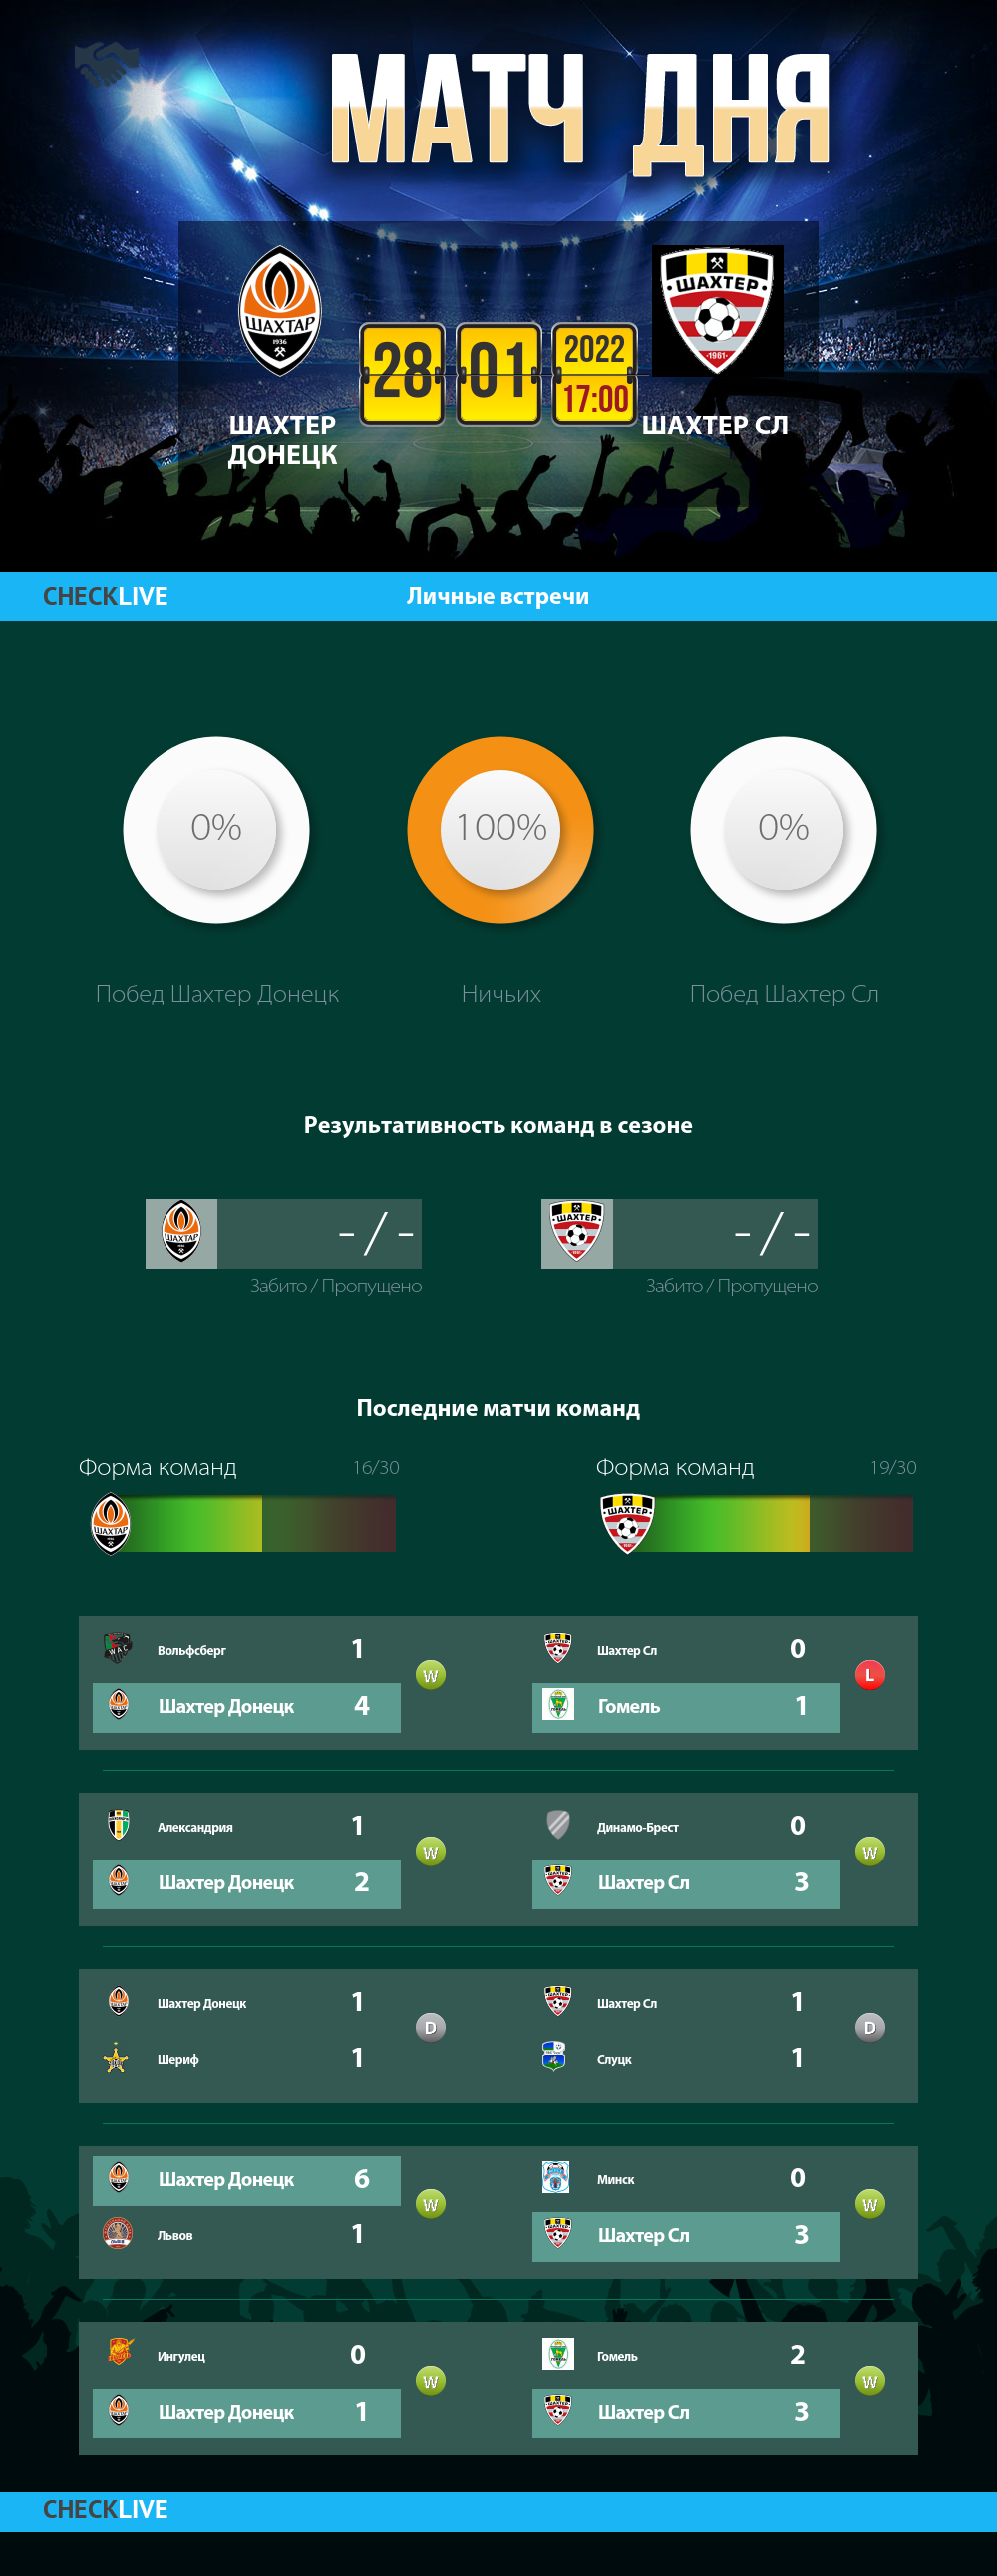 Инфографика Шахтер Донецк и Шахтер Сл матч дня 28.01.2022